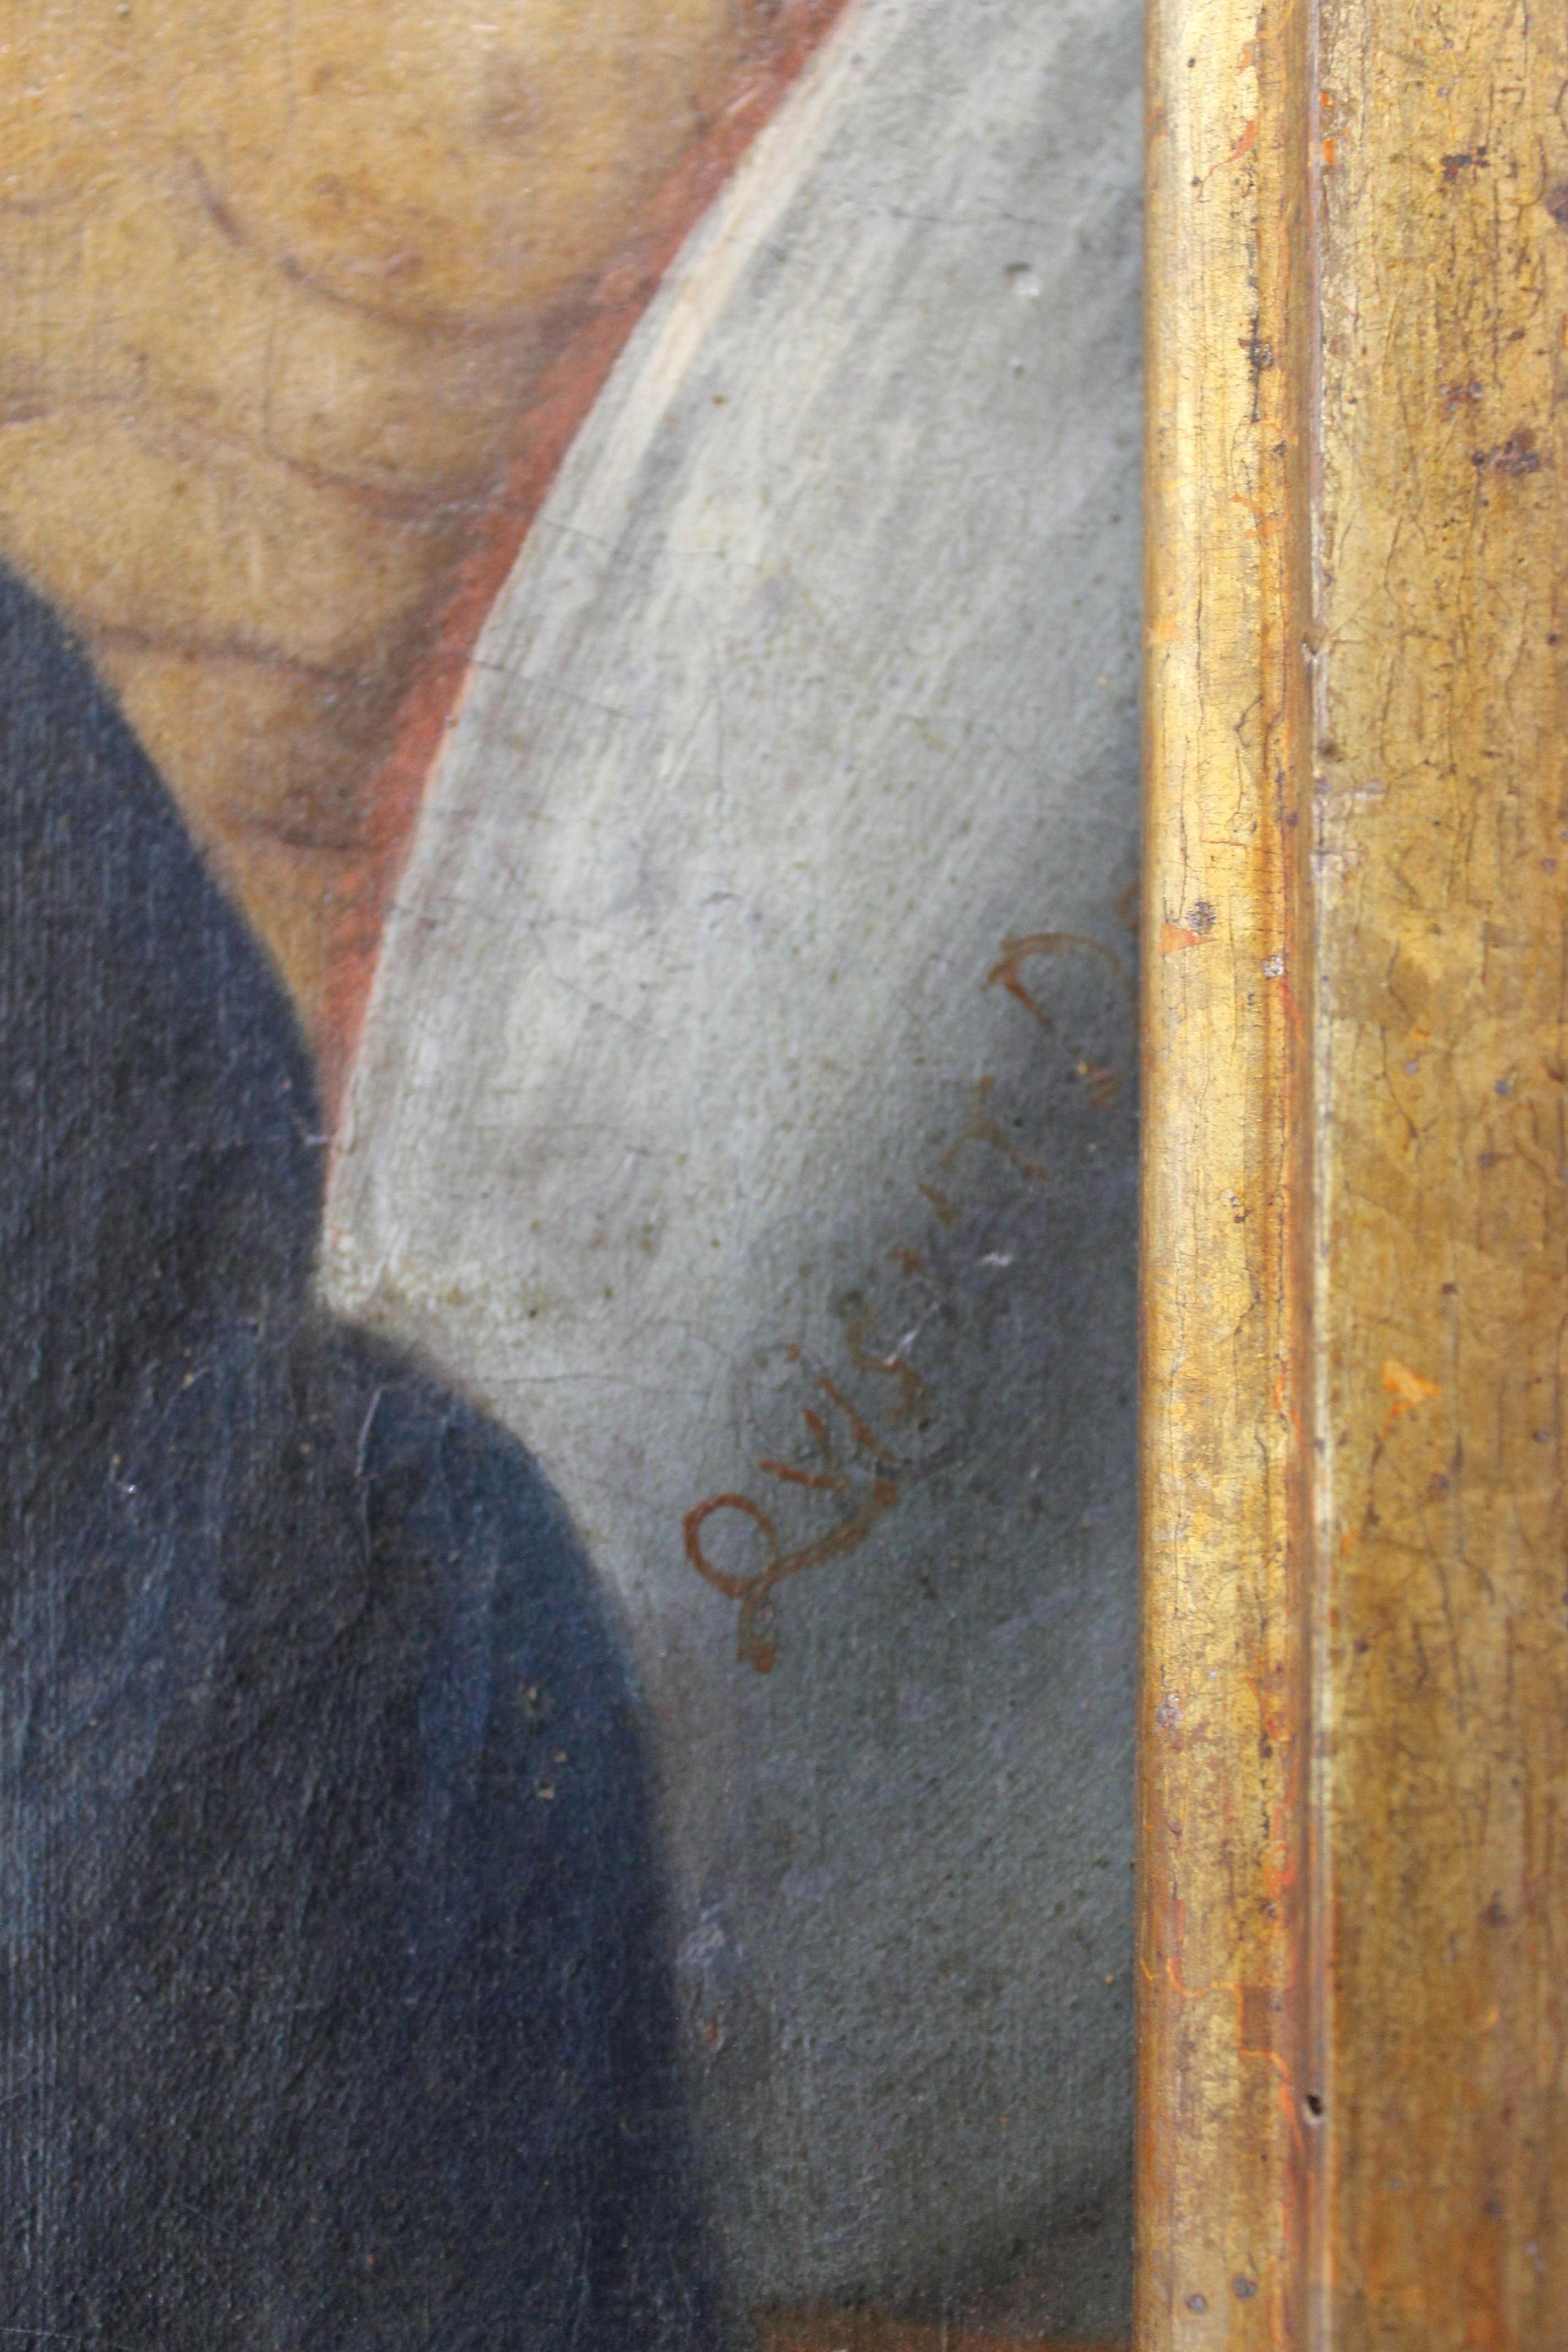 The Death of Saint Joseph, Italian Baroque Religious Scene Oil on Canvas Painting 2